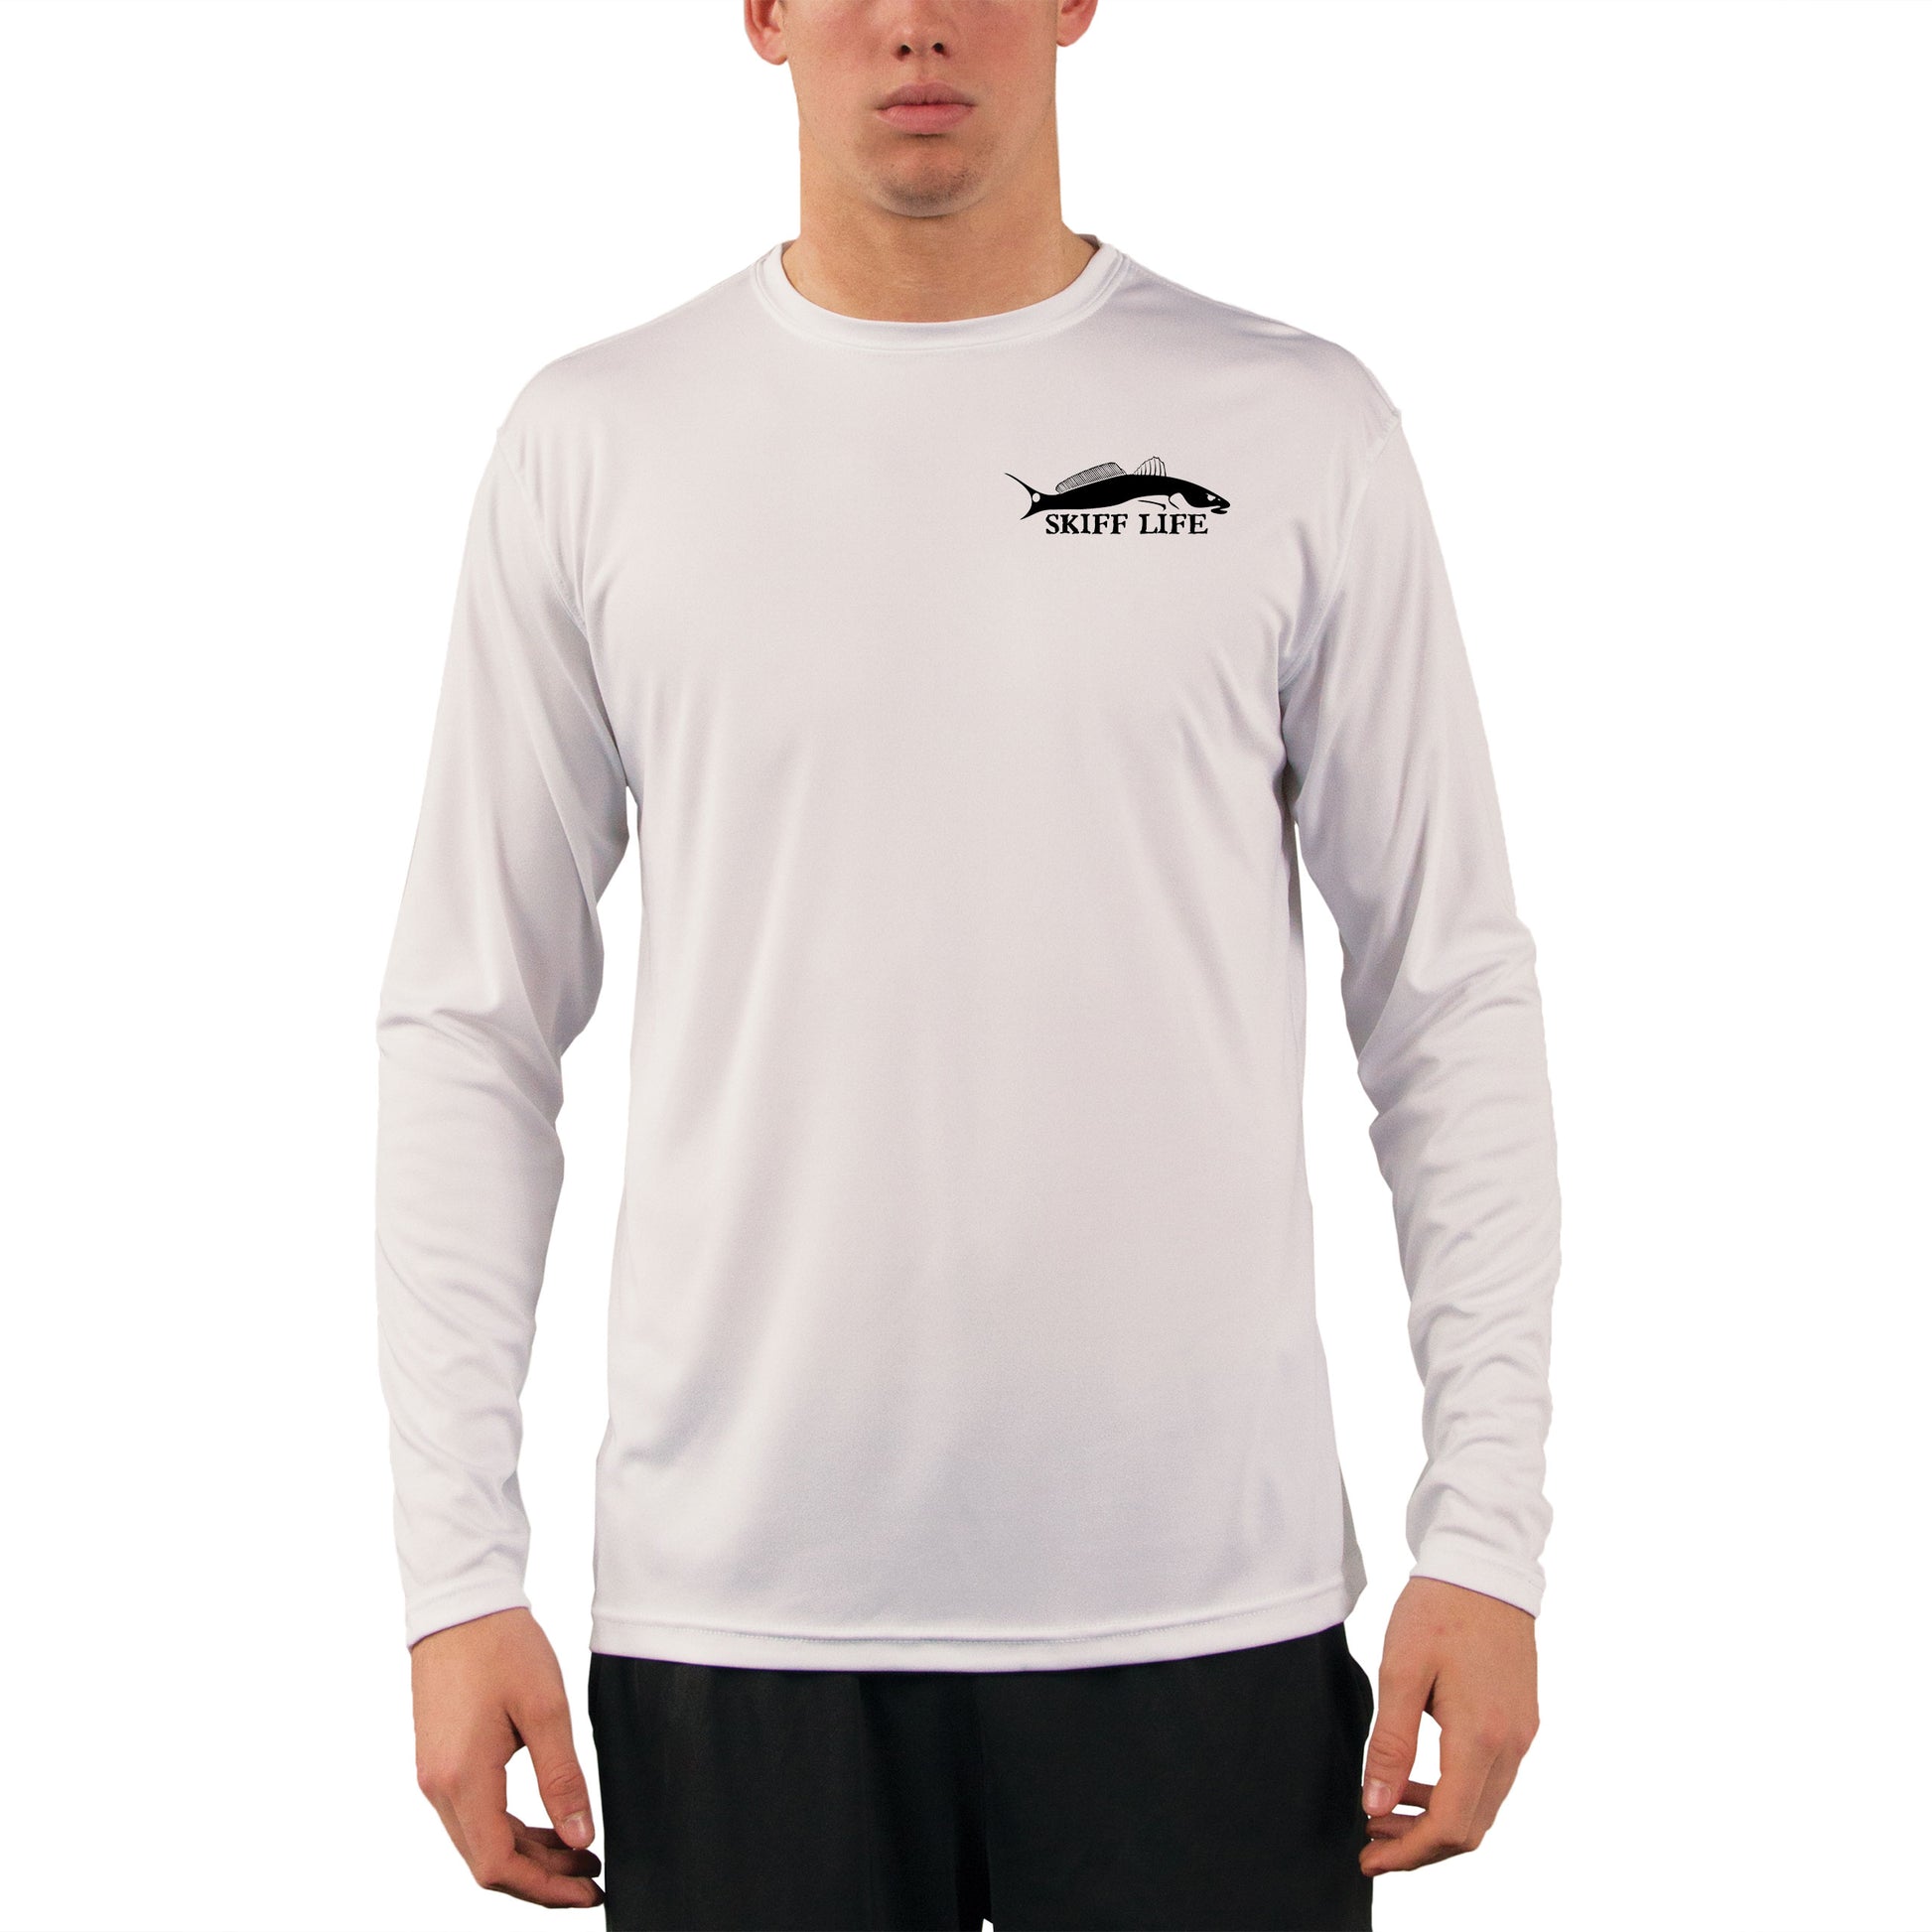 Mahi-Mahi with Flying Fish Fishing Shirts For Men featuring Dorado